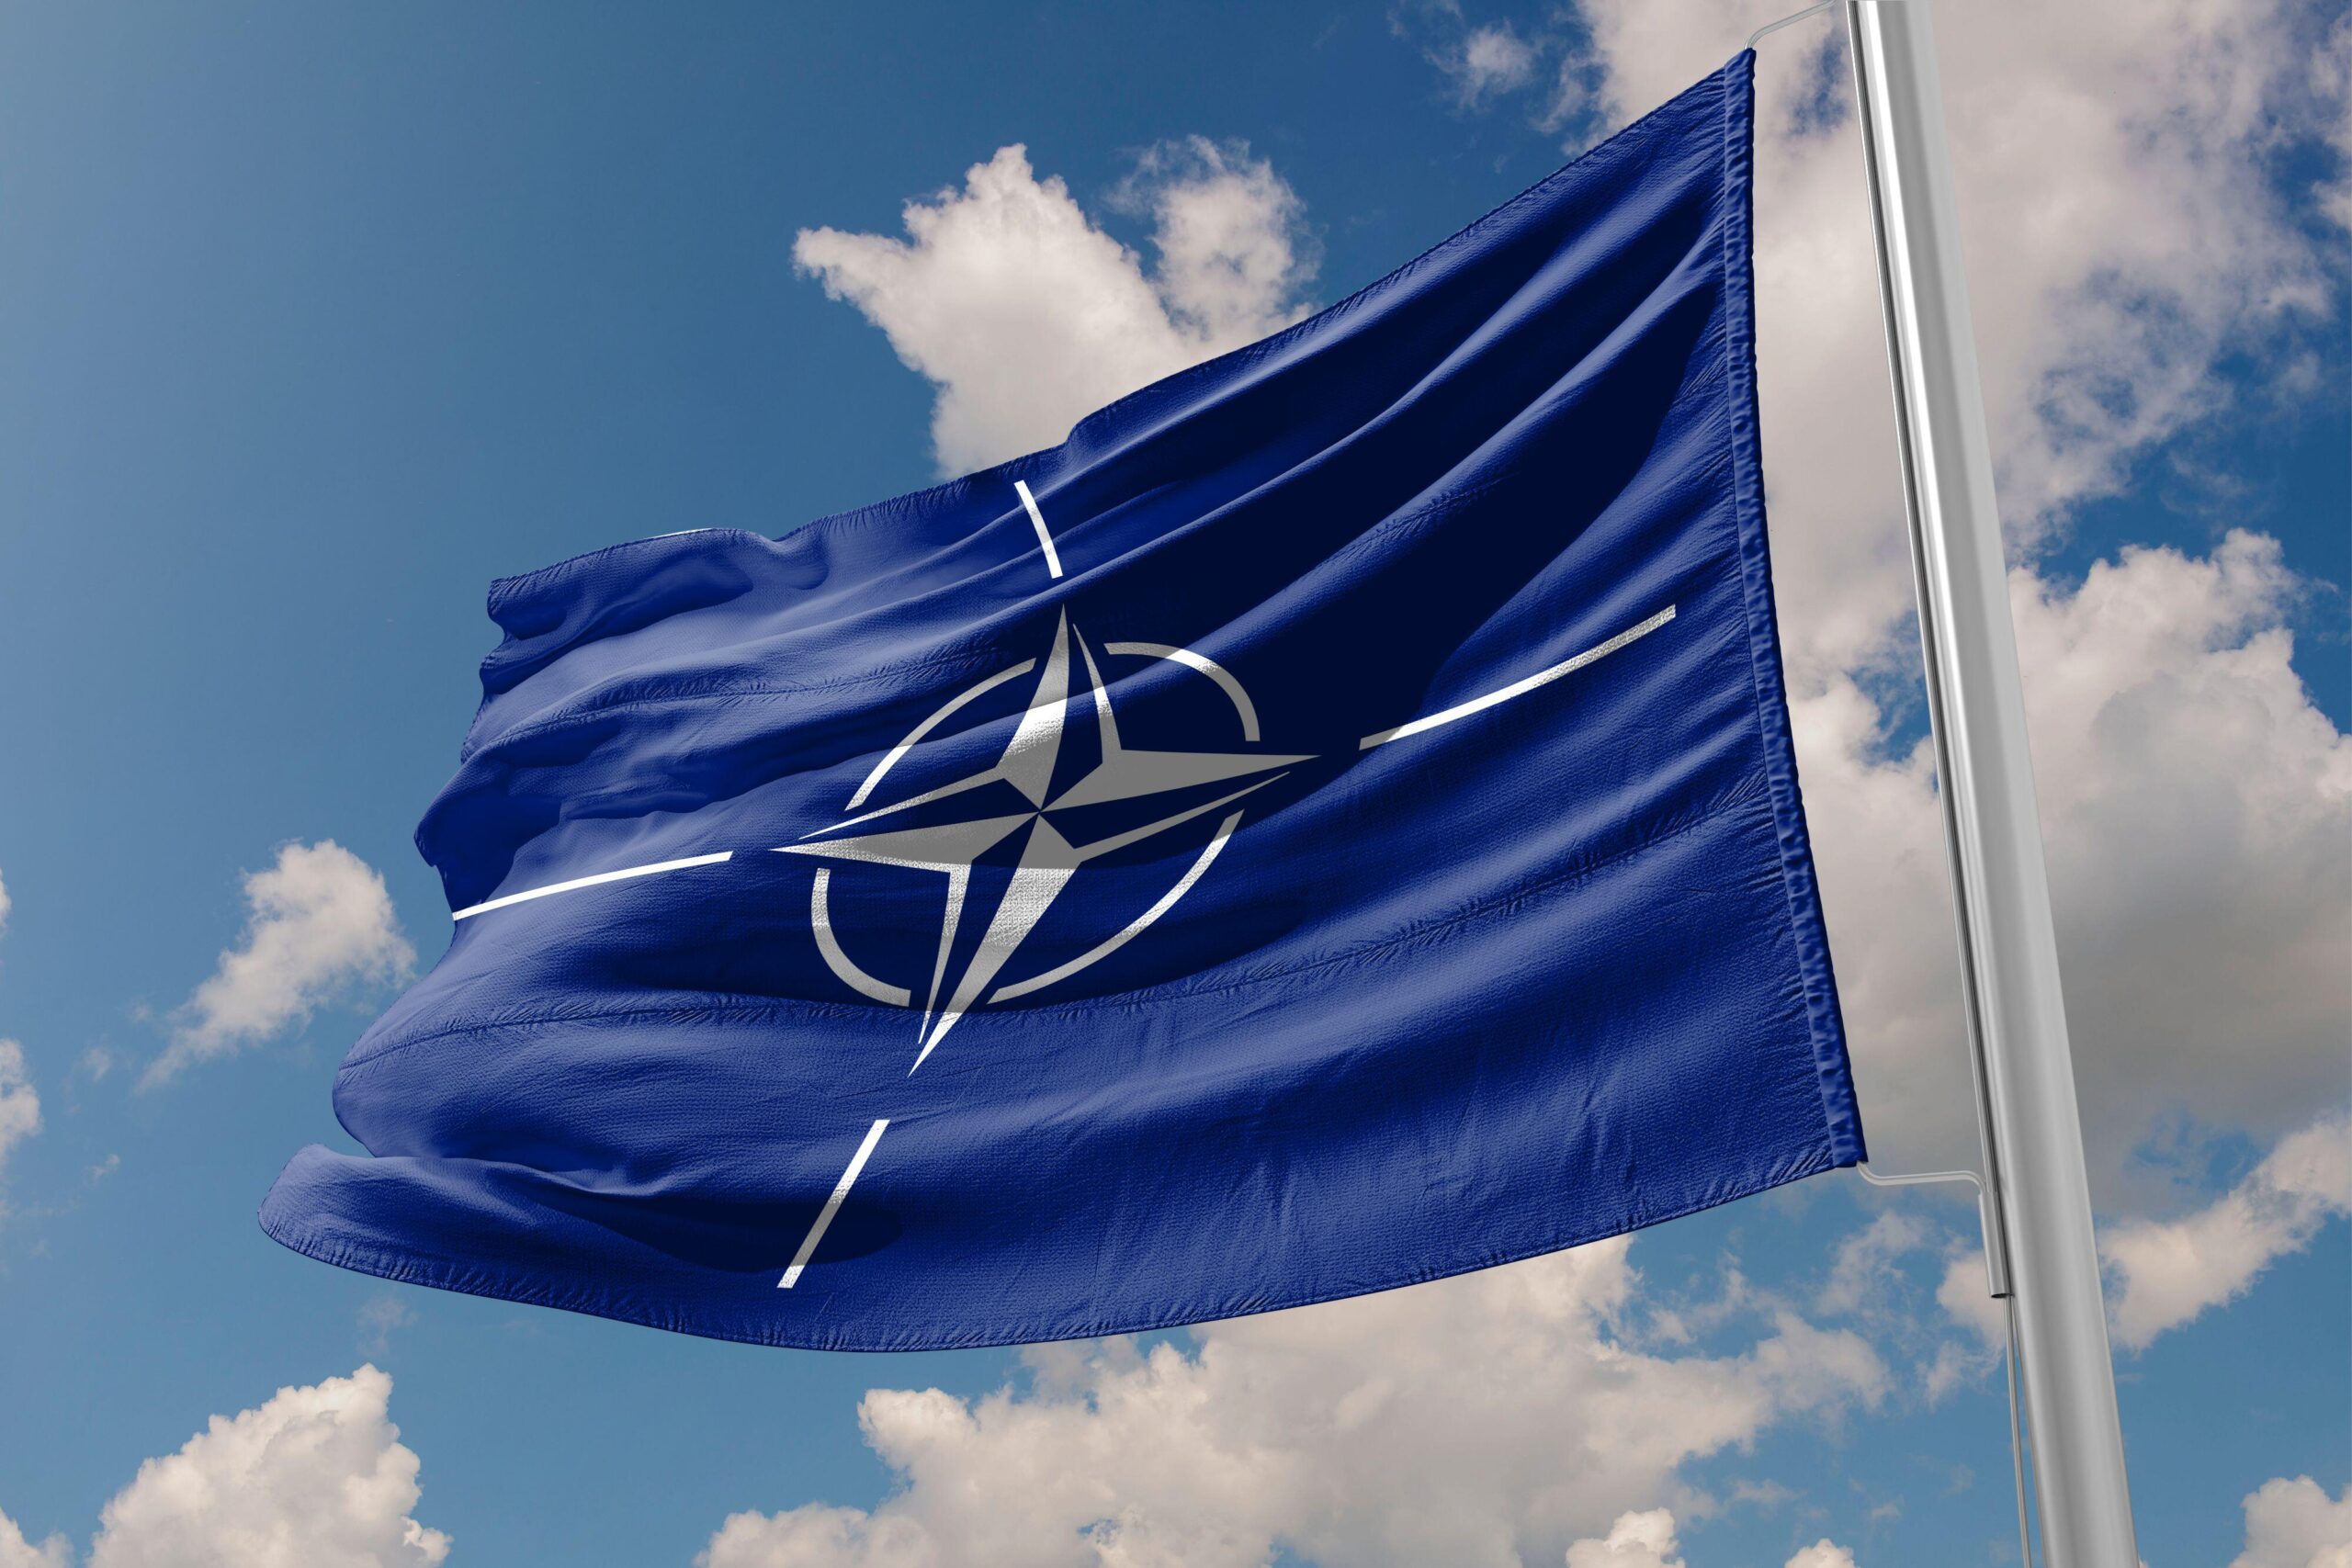 Hack Crew Responsible for Stolen Data, NATO Investigates Claims – Source: www.darkreading.com